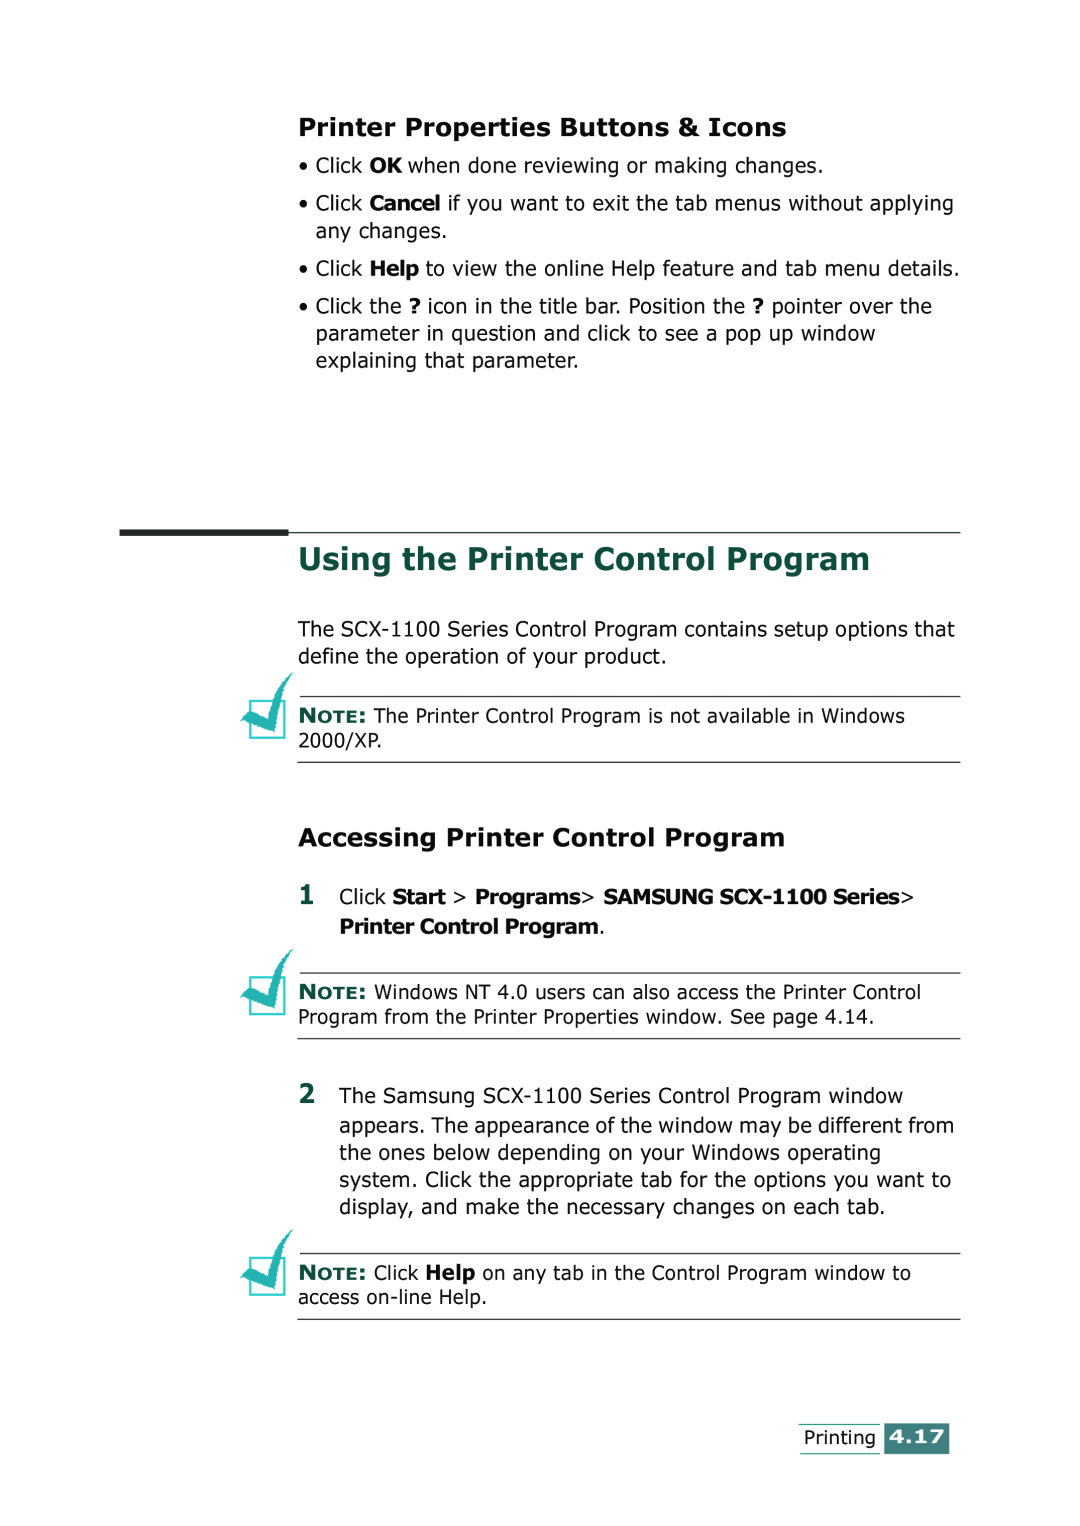 Samsung SCX-1100 Using the Printer Control Program, Printer Properties Buttons & Icons, Accessing Printer Control Program 